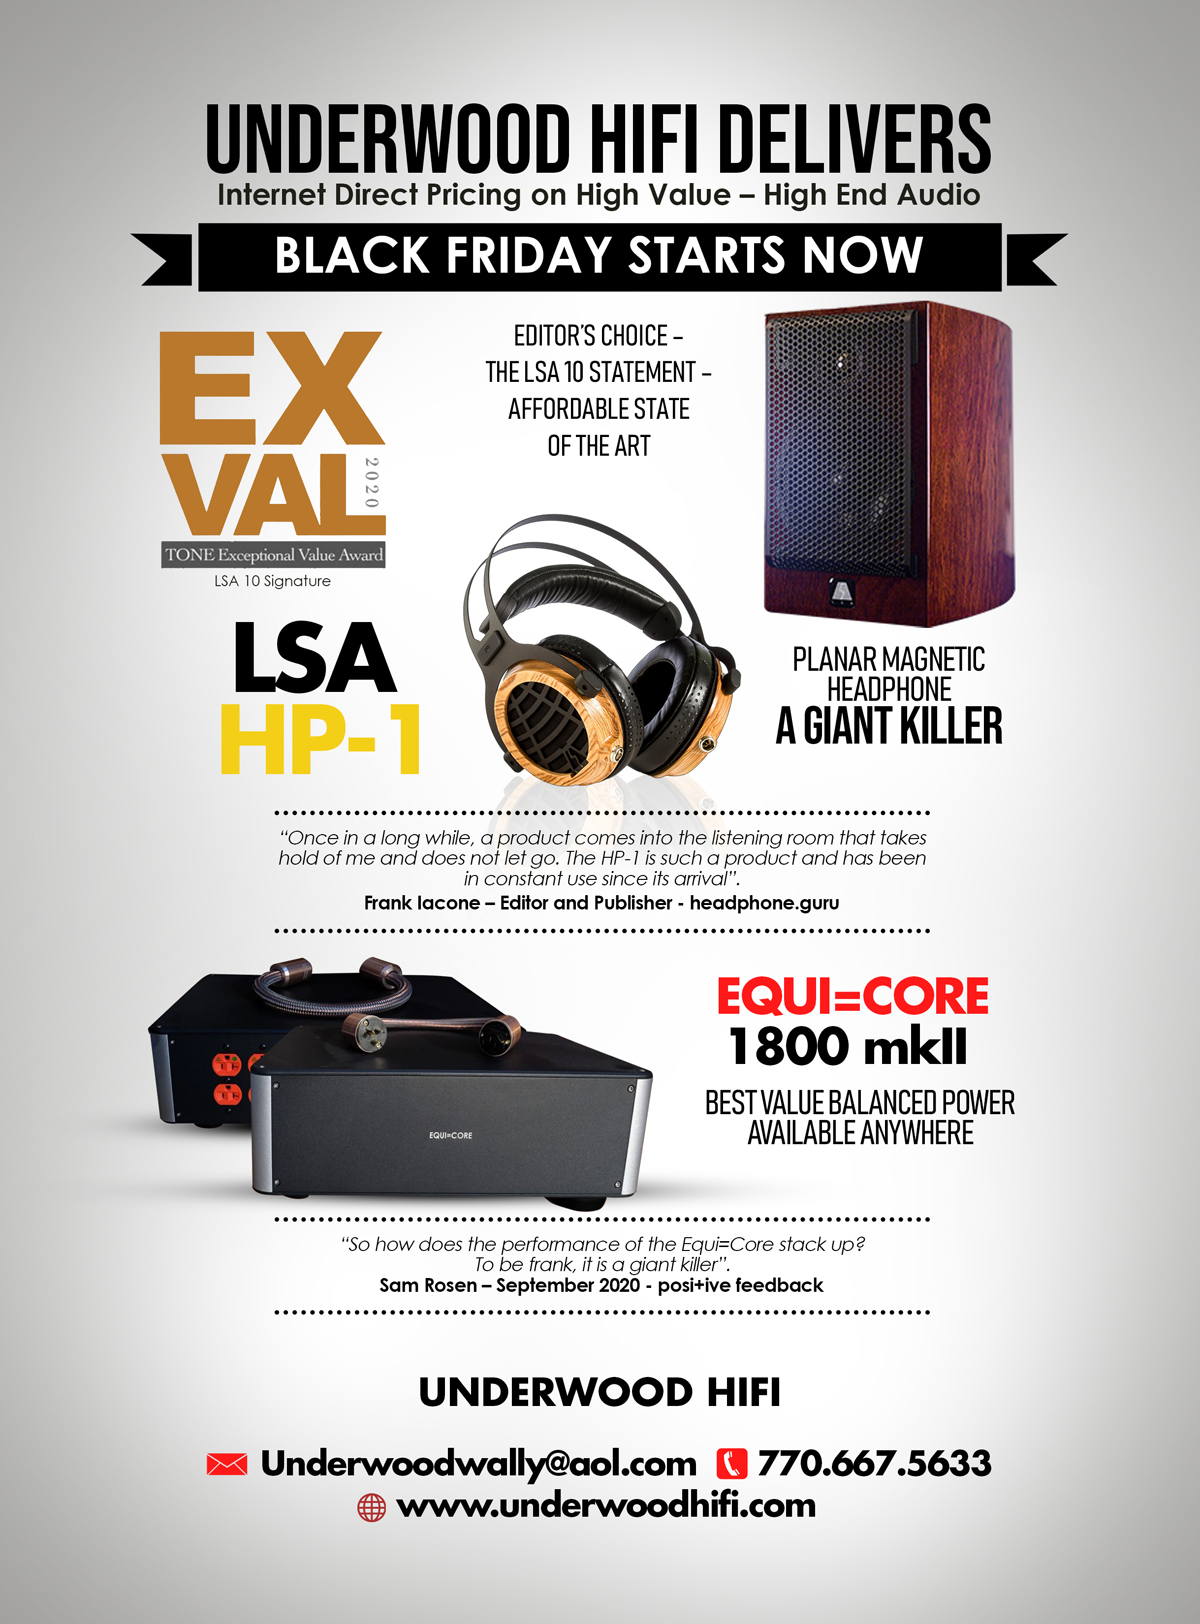 Underwood HiFi Black Friday Sale Starts Now